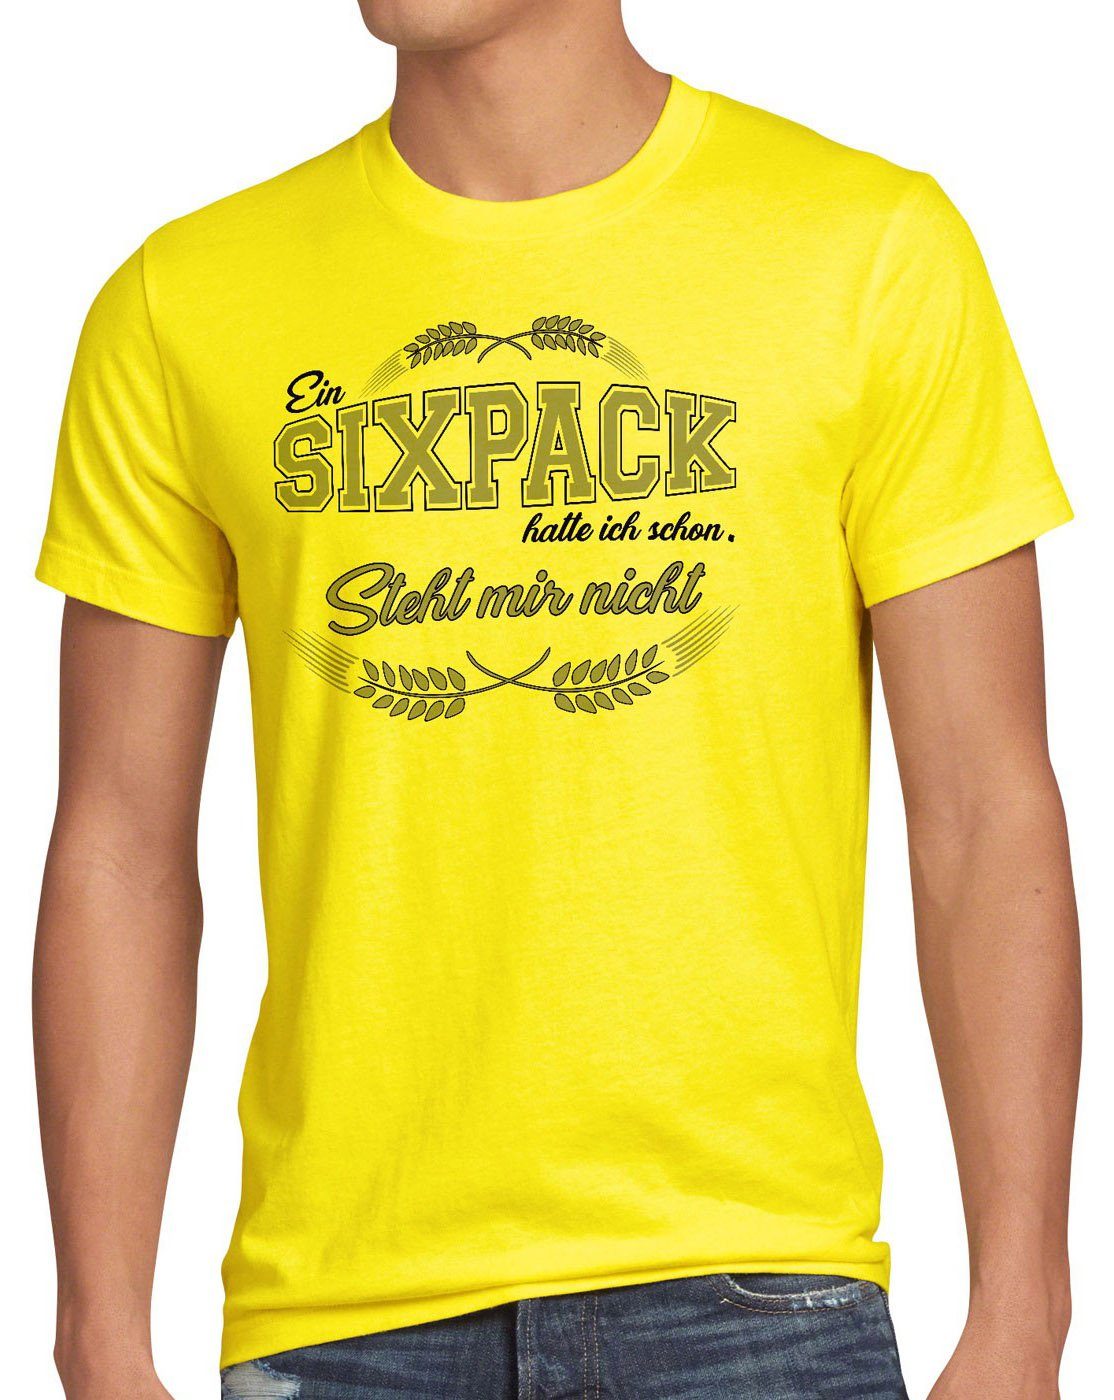 Herren nicht Print-Shirt Funshirt Spruch Bier style3 gelb mir steht hatte T-Shirt Shirt Fun Sixpack ich